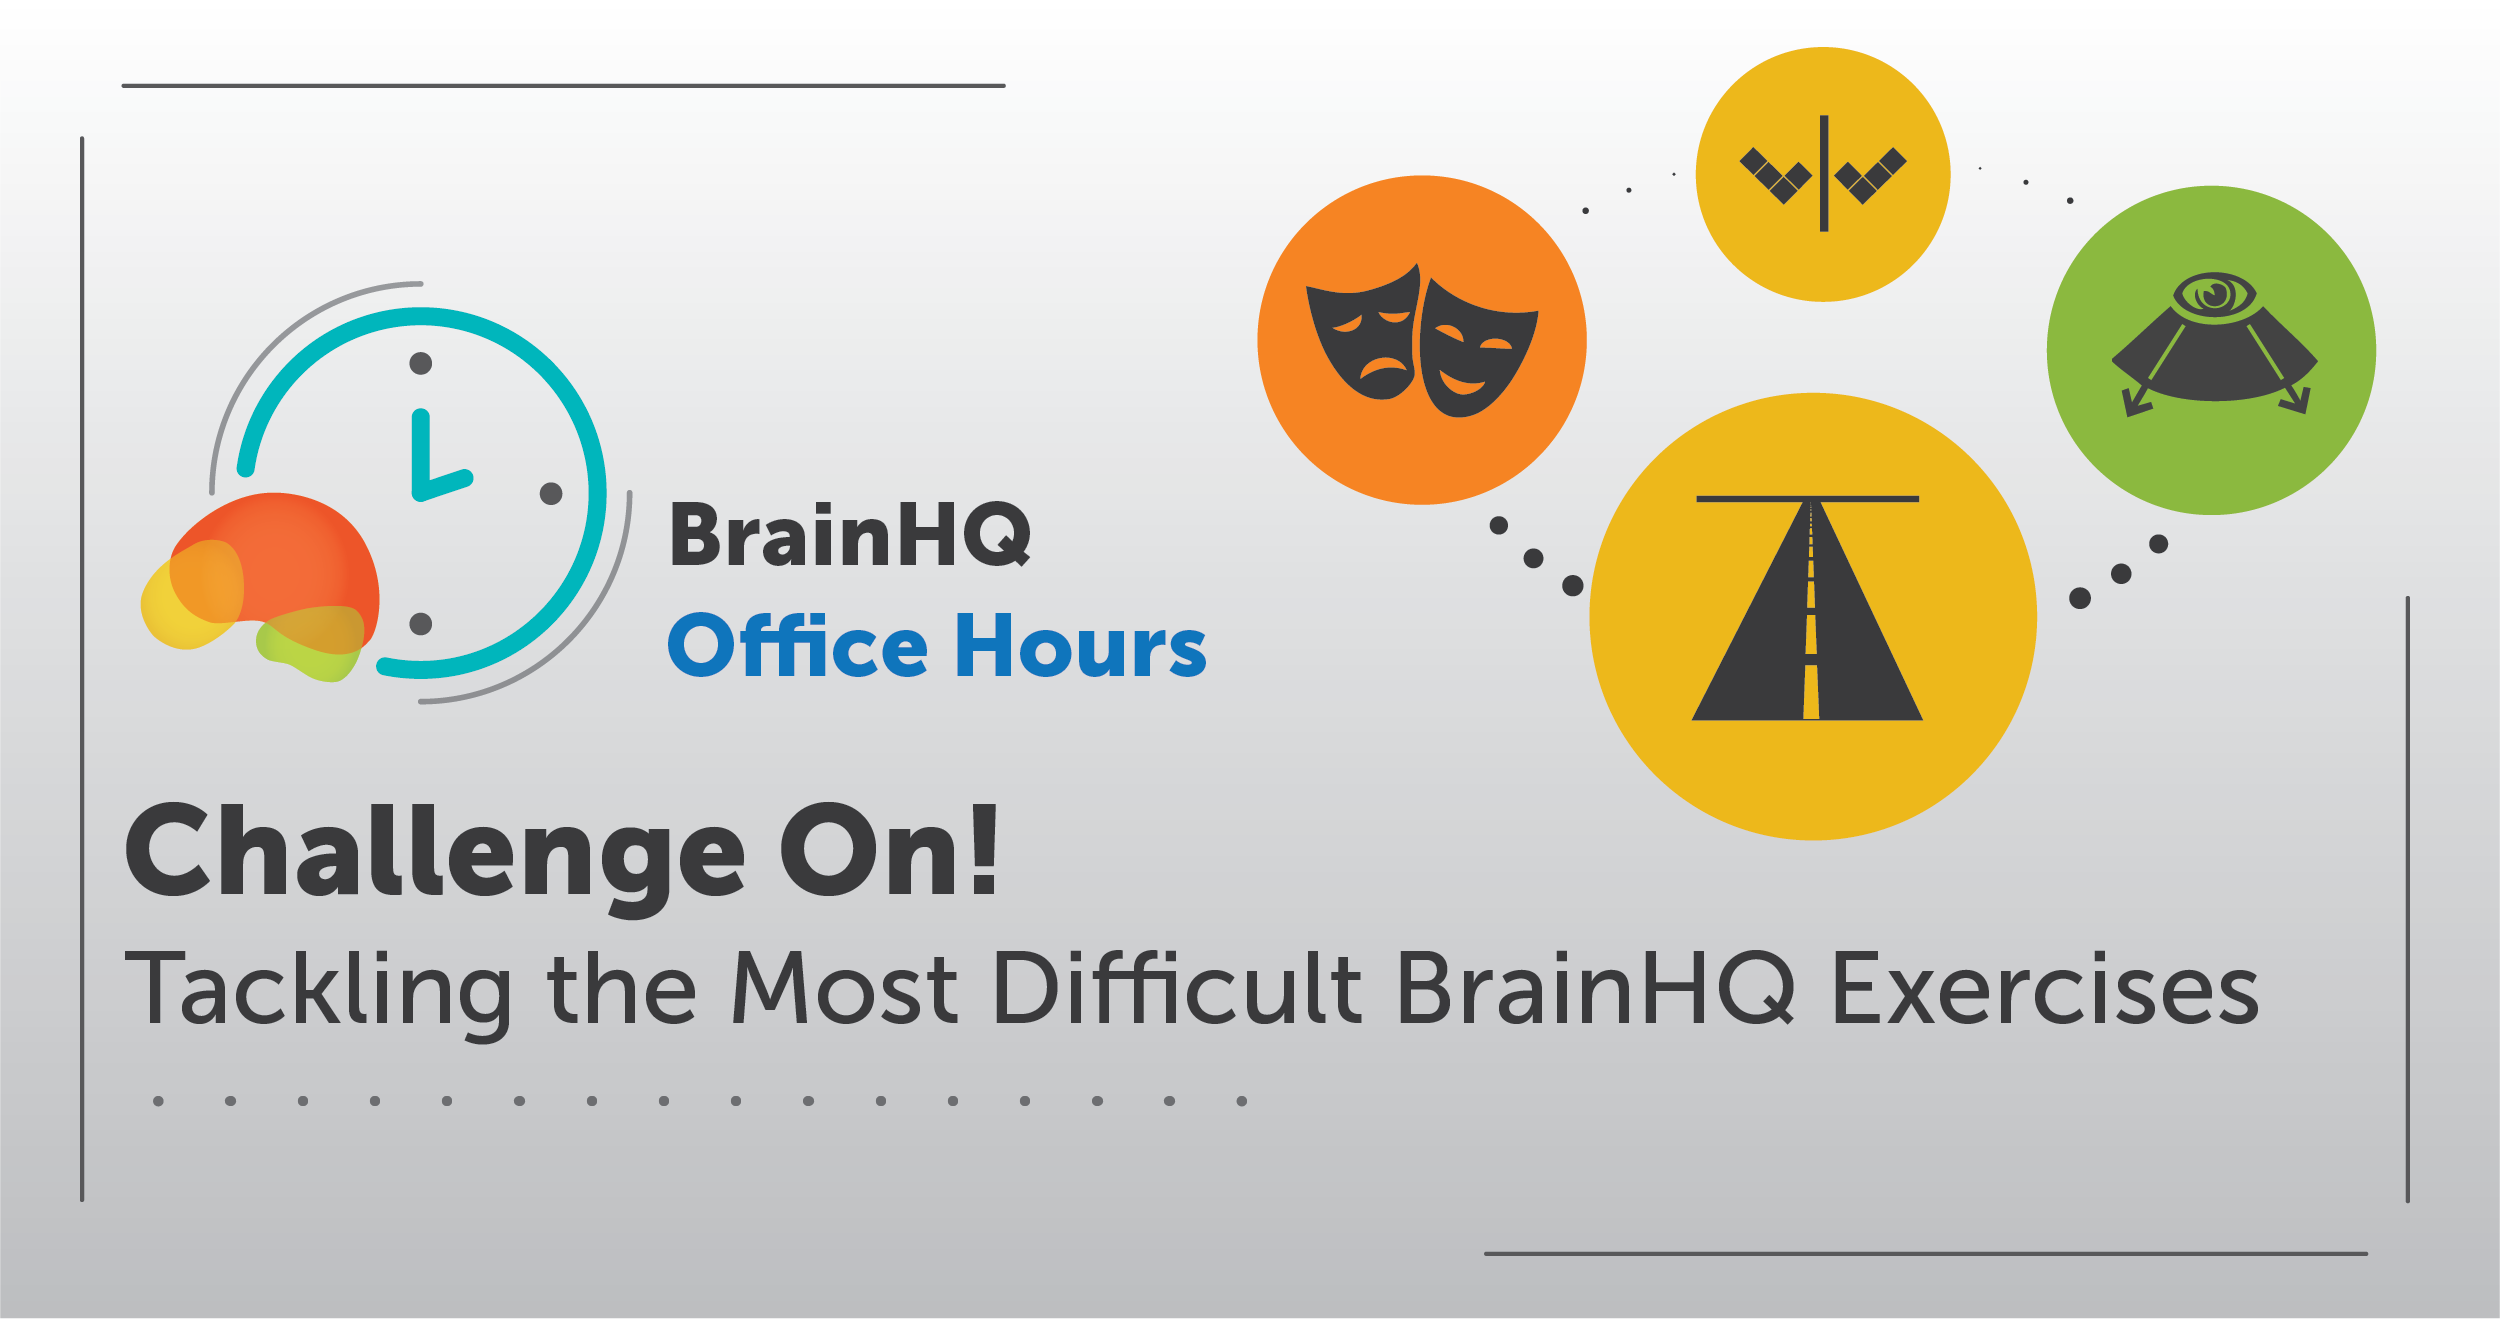 BrainHQ Office Hours: Challenge On